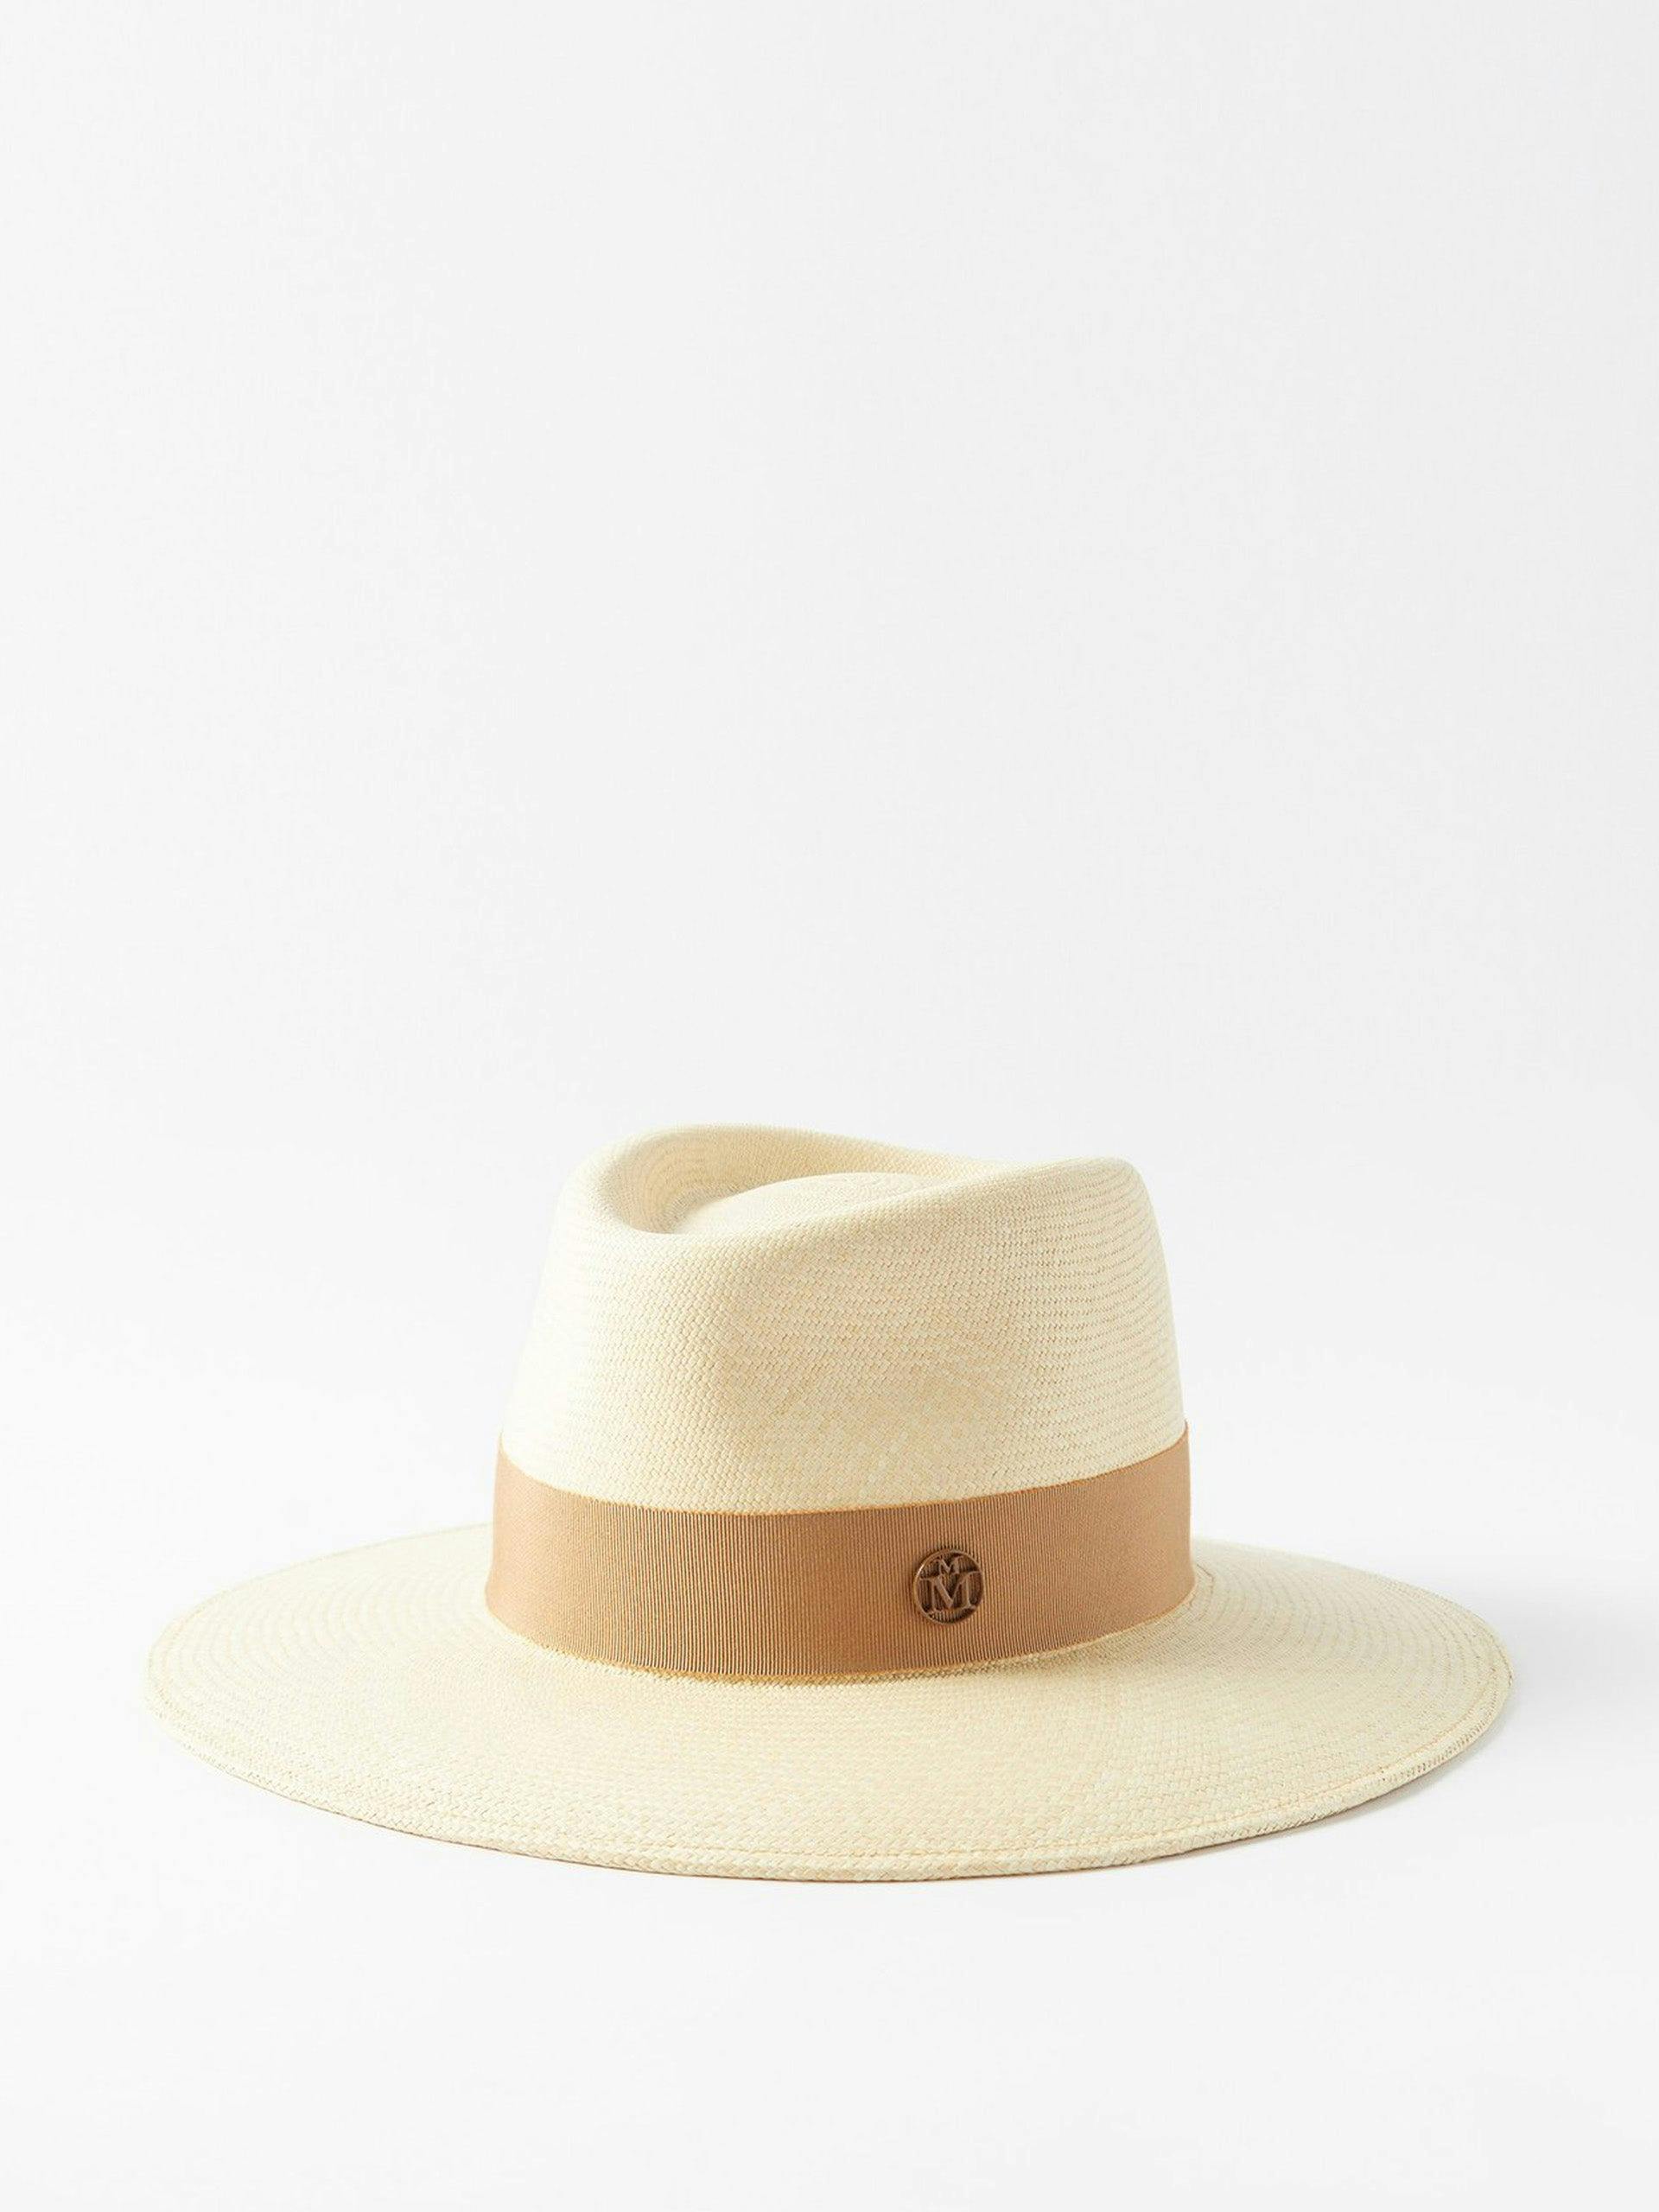 Beige straw Panama hat